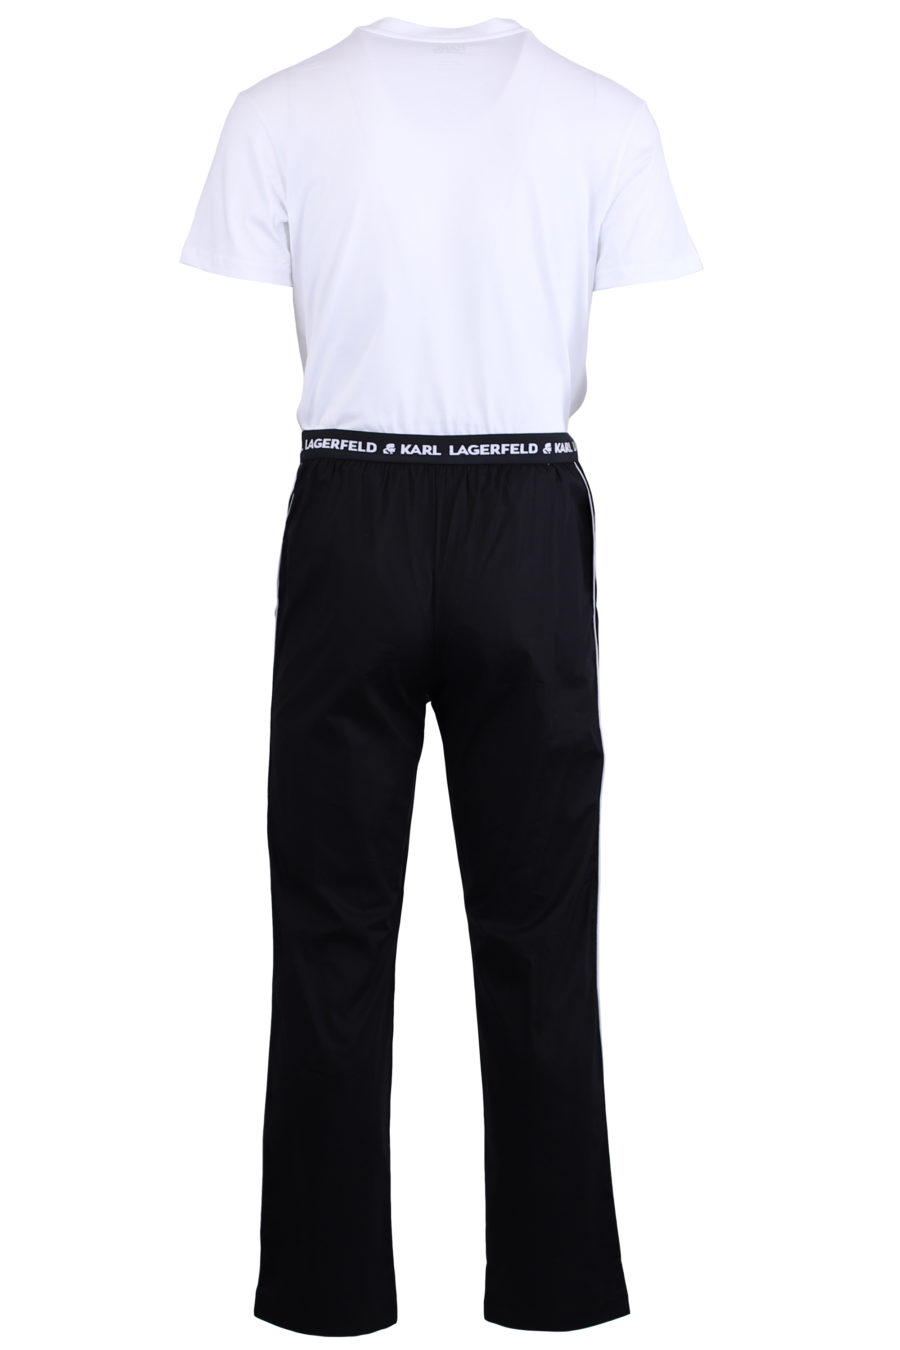 Set de pijama blanca y negra "ikonik" - IMG 0610